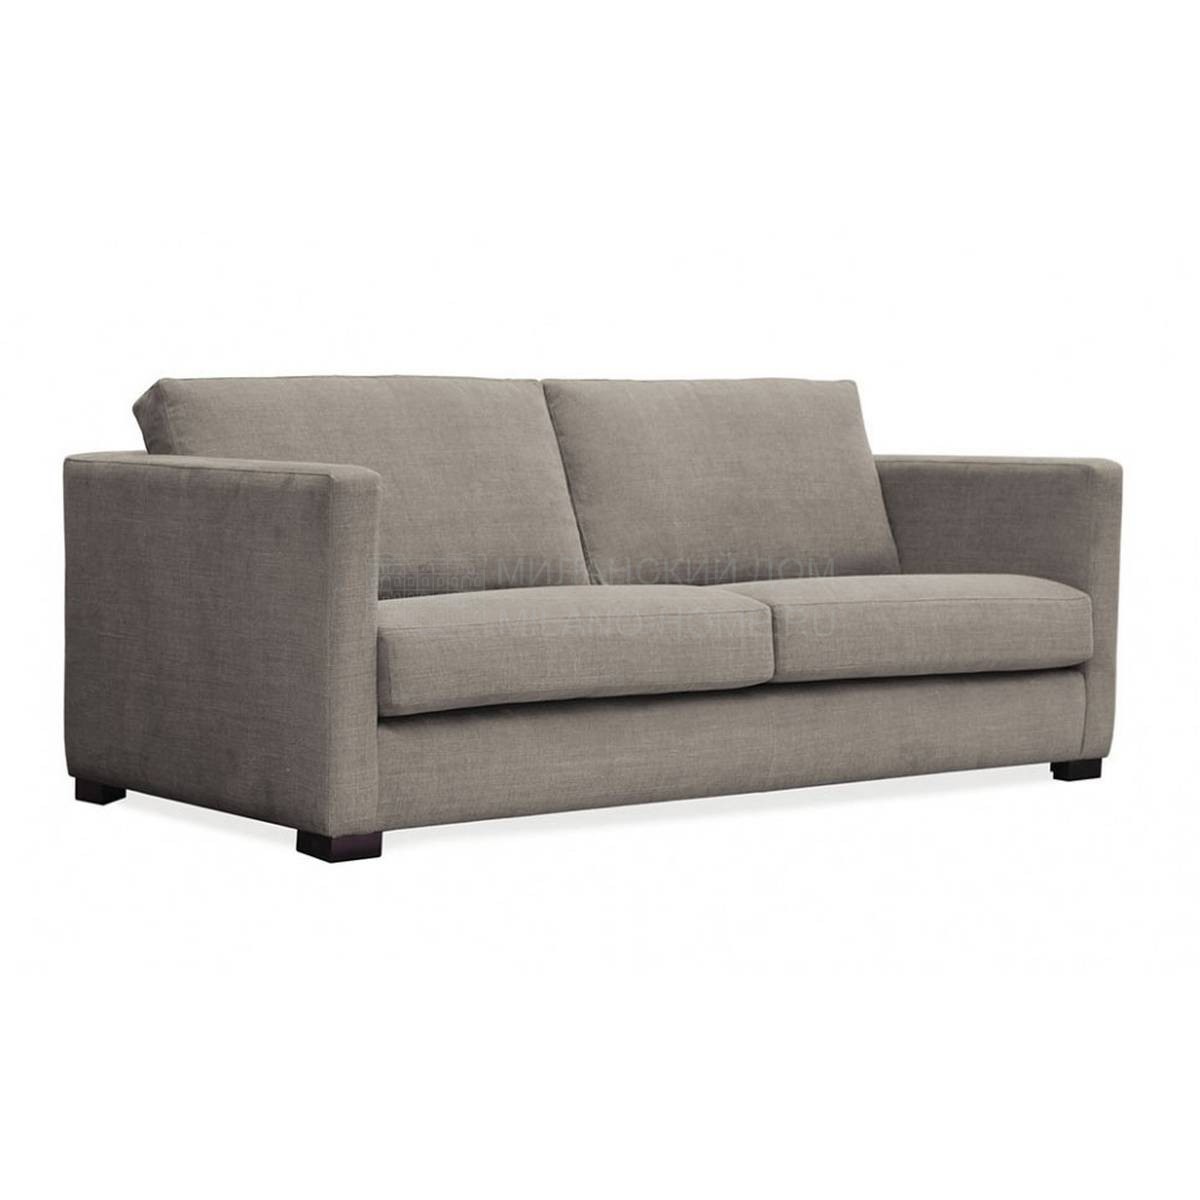 Прямой диван Venezia/sofa из Испании фабрики MANUEL LARRAGA